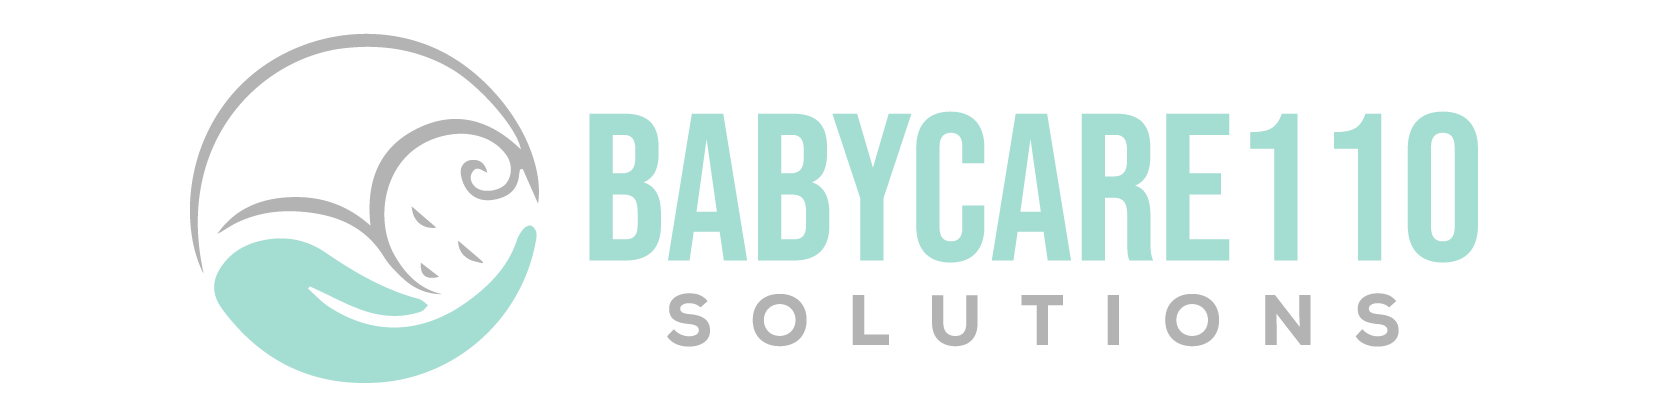 Home - Babycare110 Solutions | Genuine Advice!